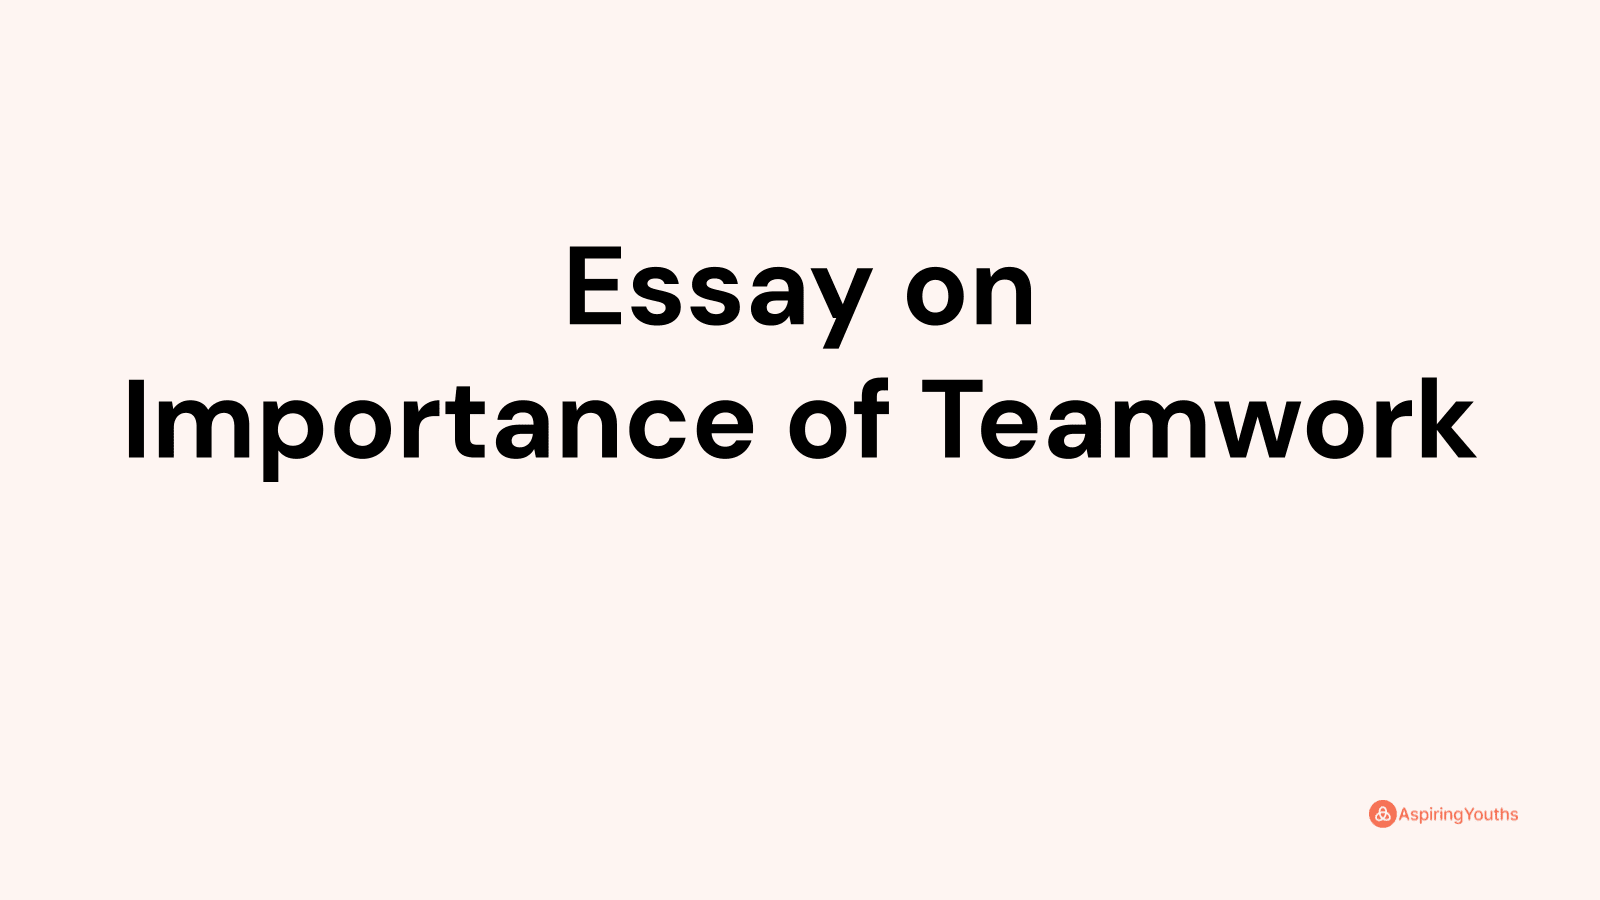 Essay on Importance of Teamwork